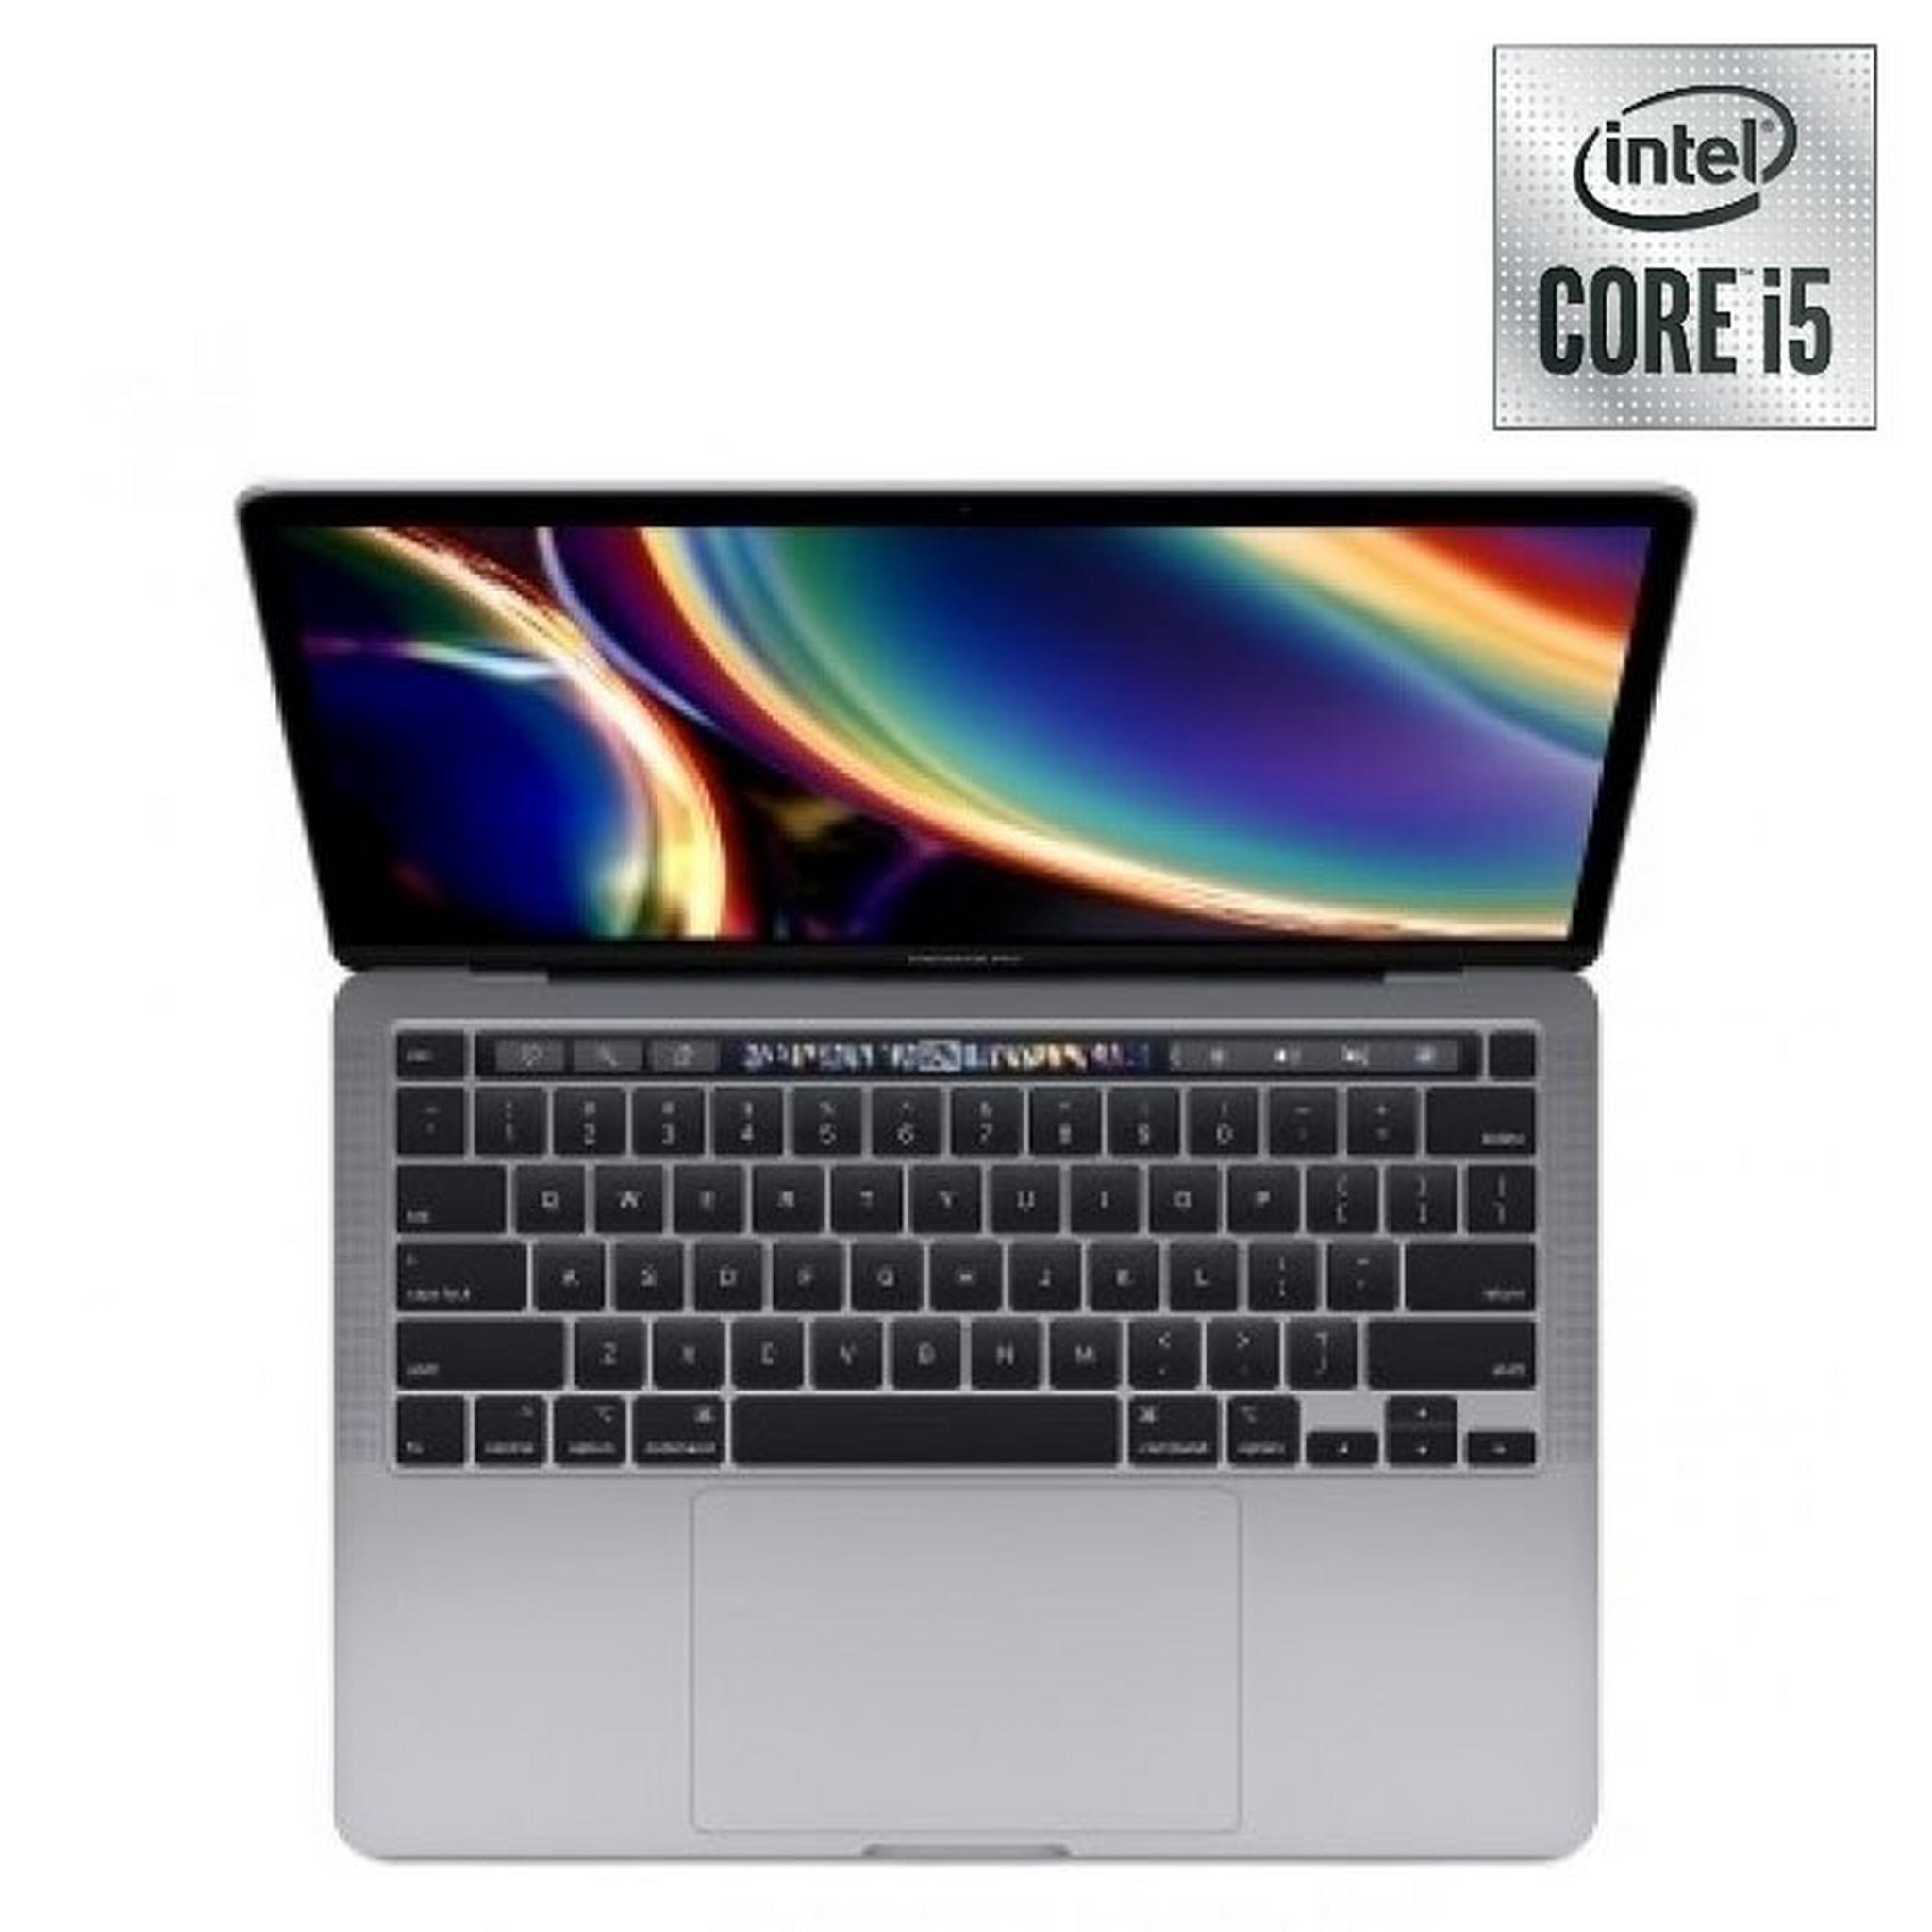 Apple Macbook Pro 8th Gen Core i5 8GB RAM 512GB SSD 13.3-inch Laptop (MXK52AB/A) - Space Grey